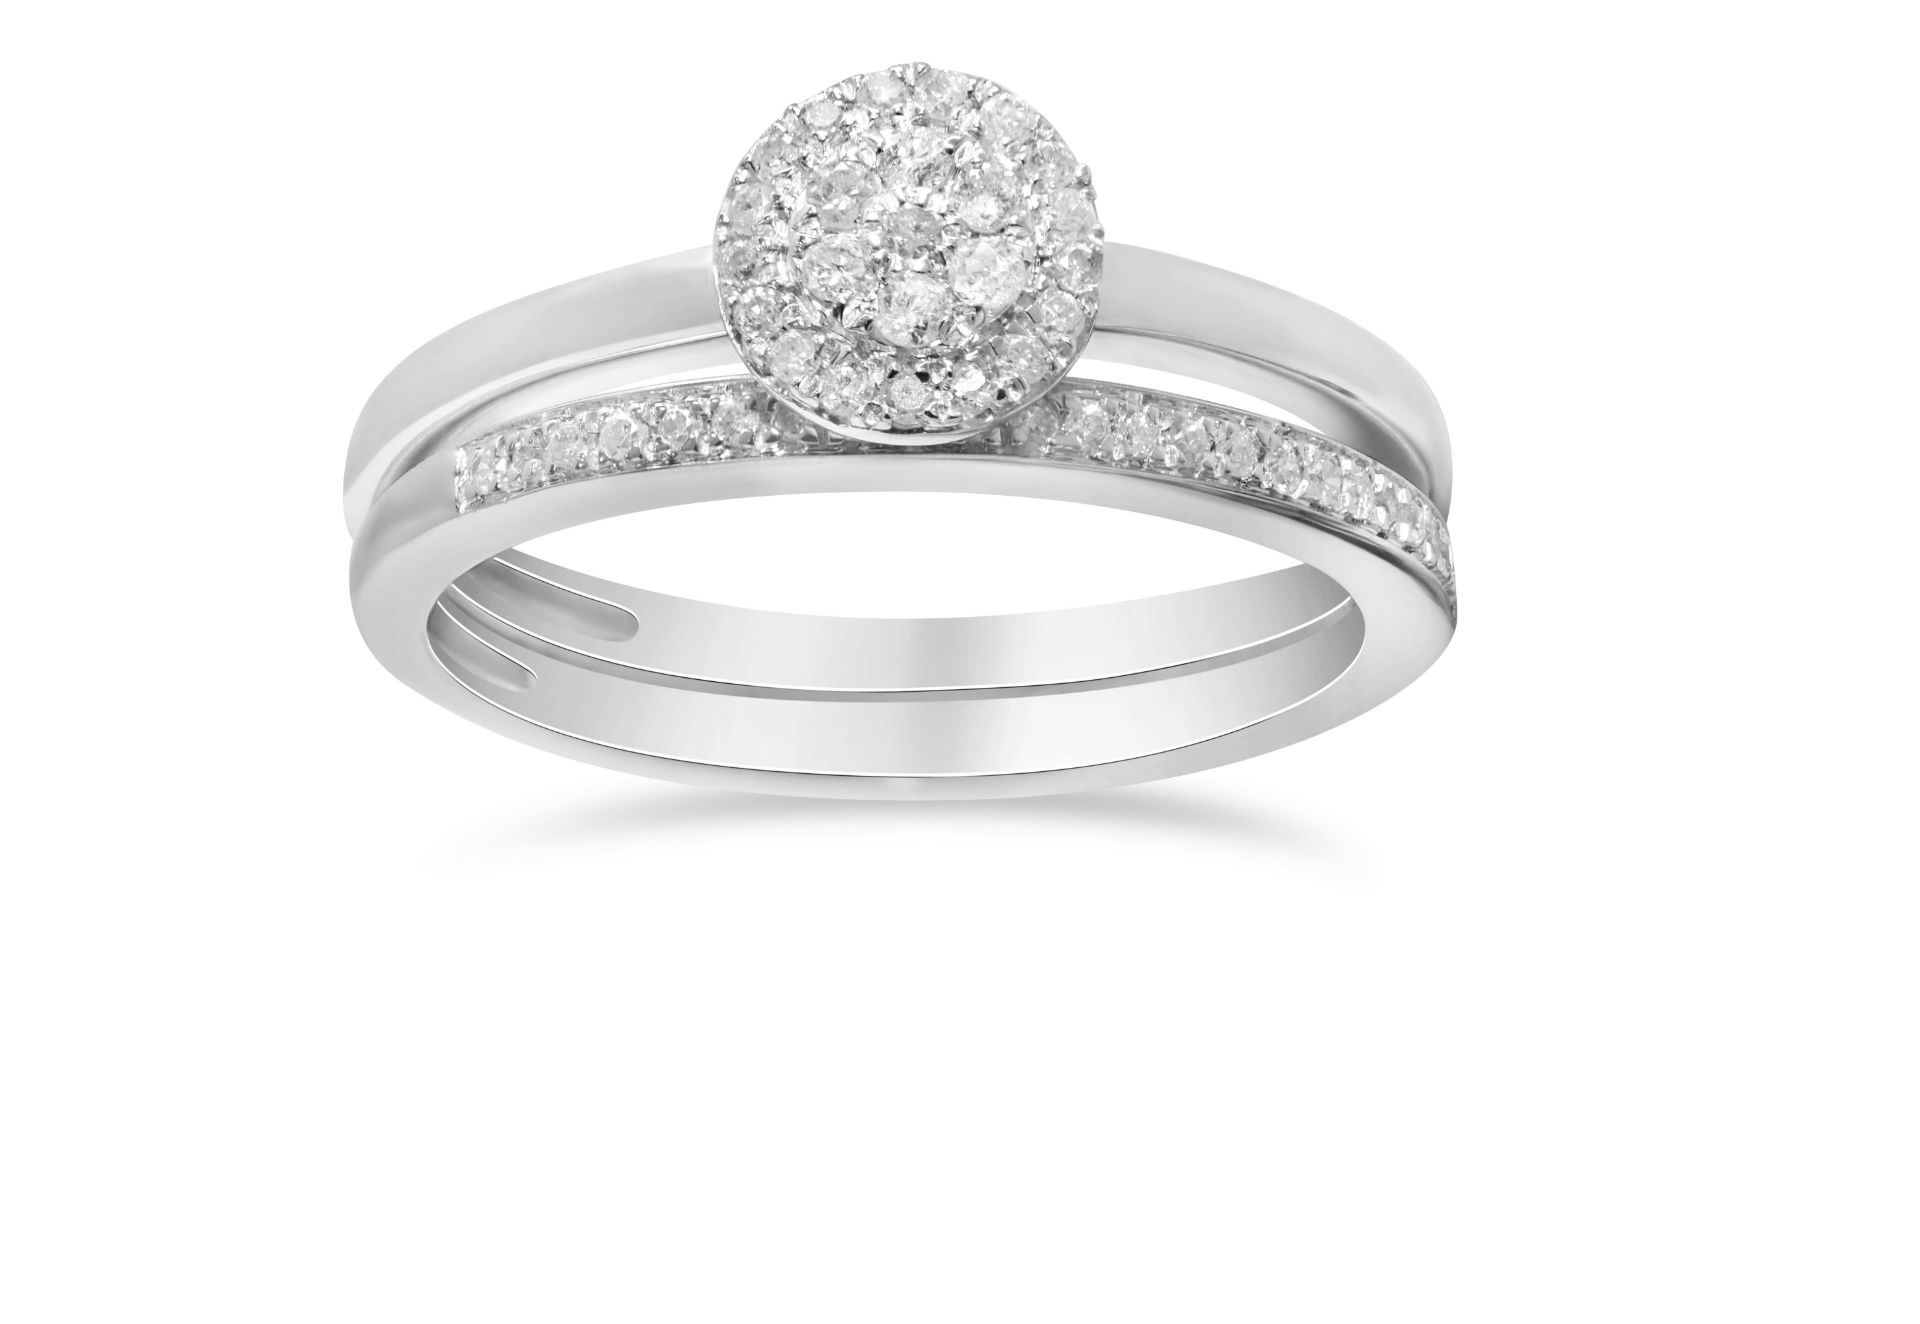 Matching Bridal Set of Engagement and Wedding ring